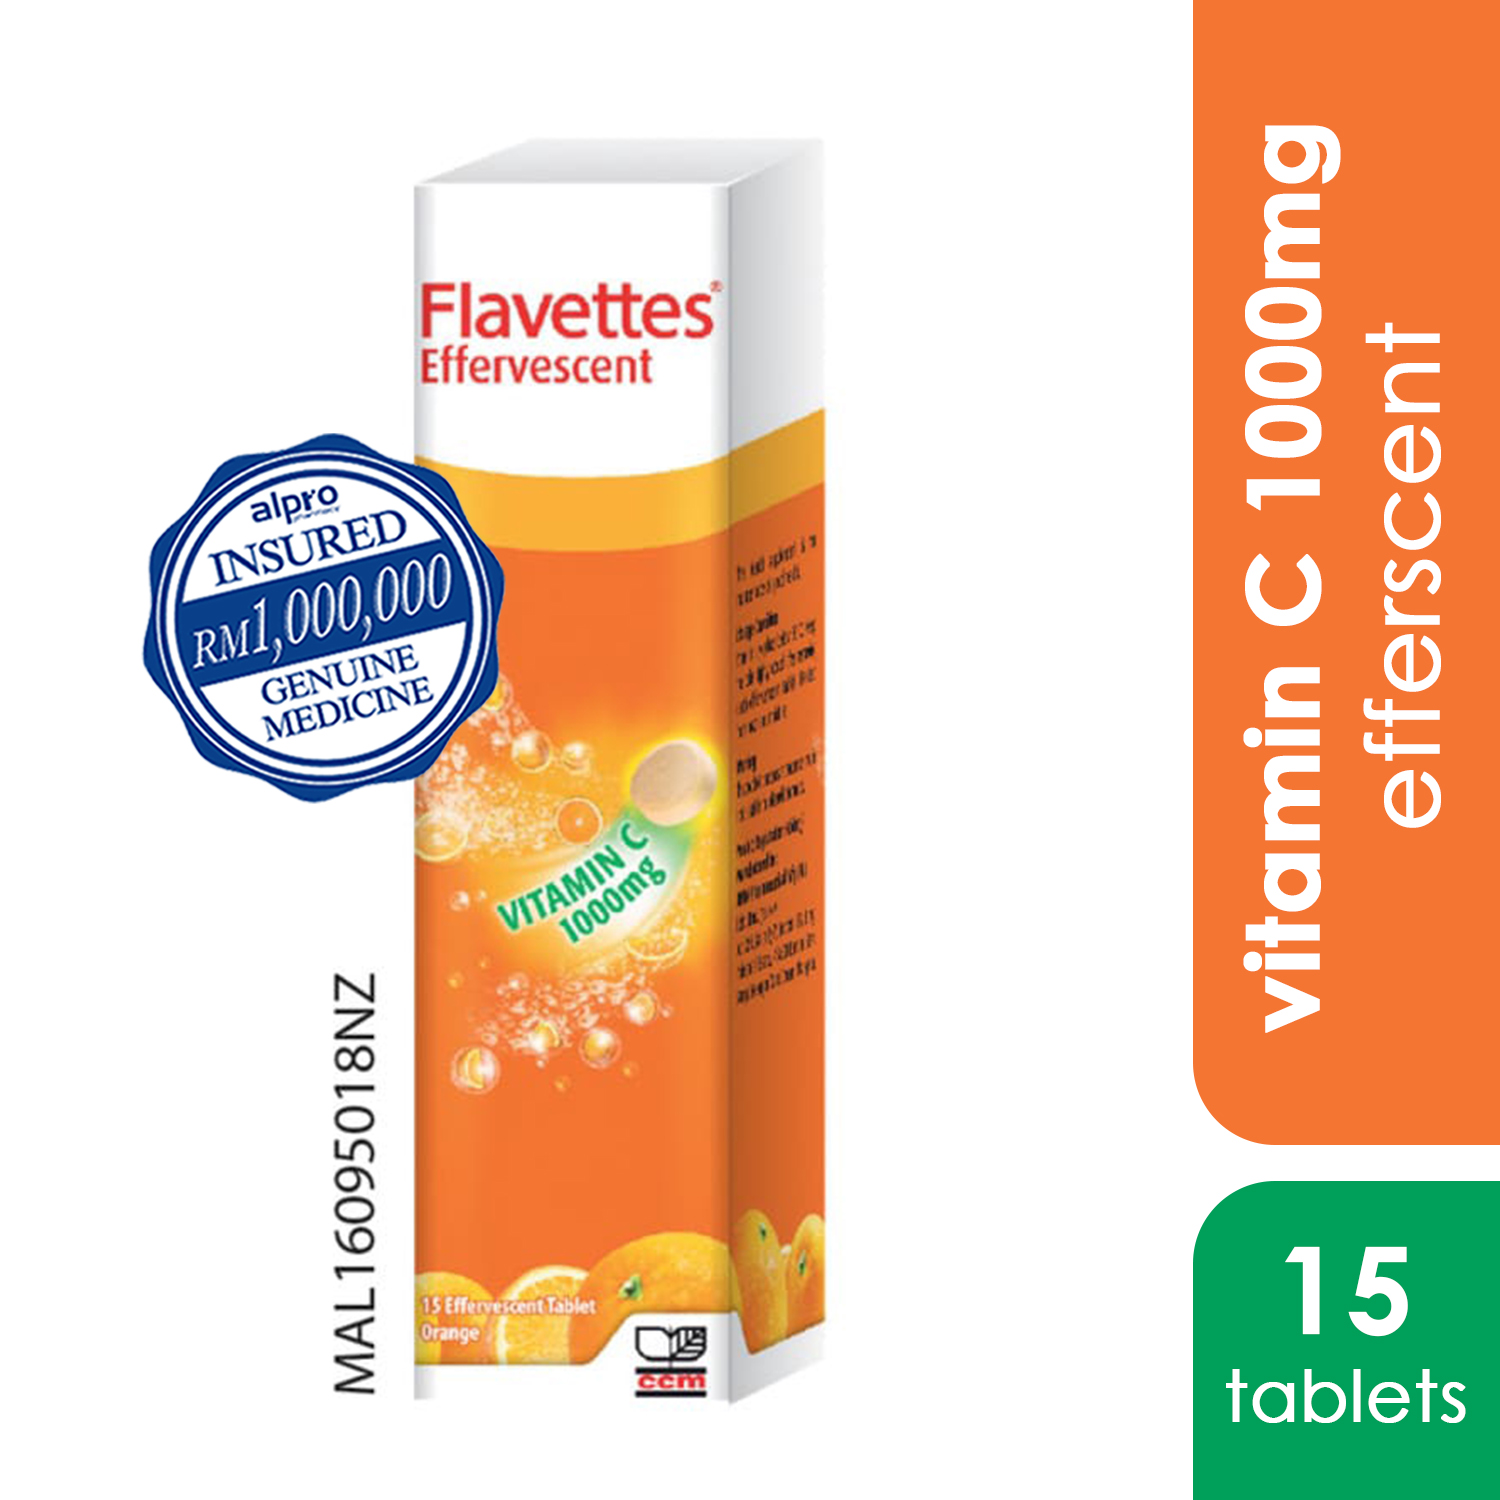 Flavettes Vit.c 1000mg Effervescent Orange 15s - Alpro Pharmacy